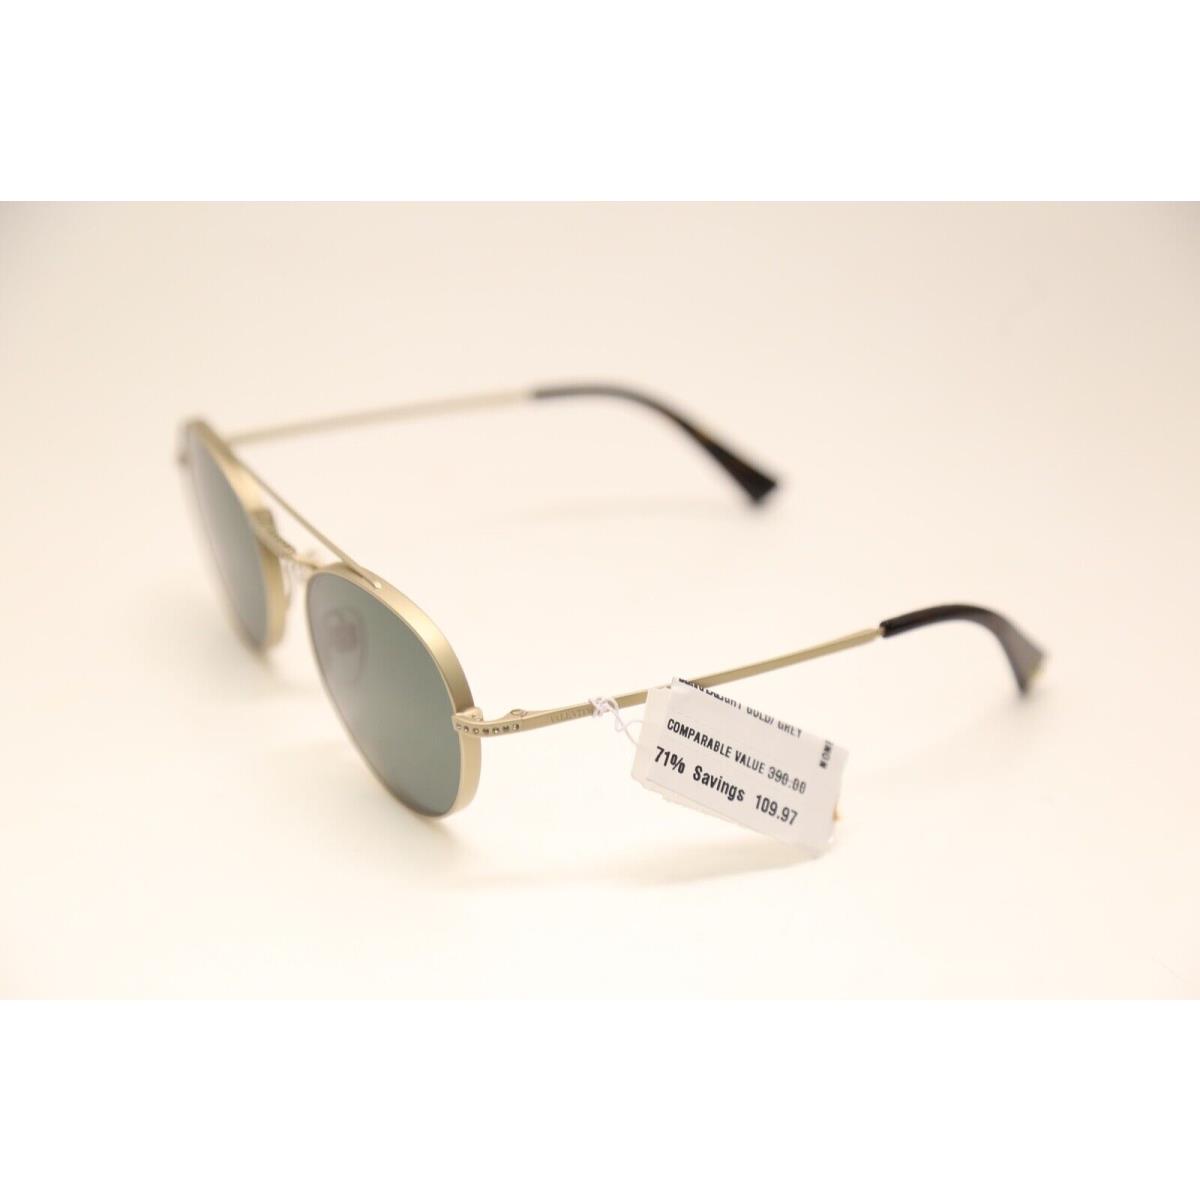 Valentino sunglasses  - Gold Frame, Gray Lens 1